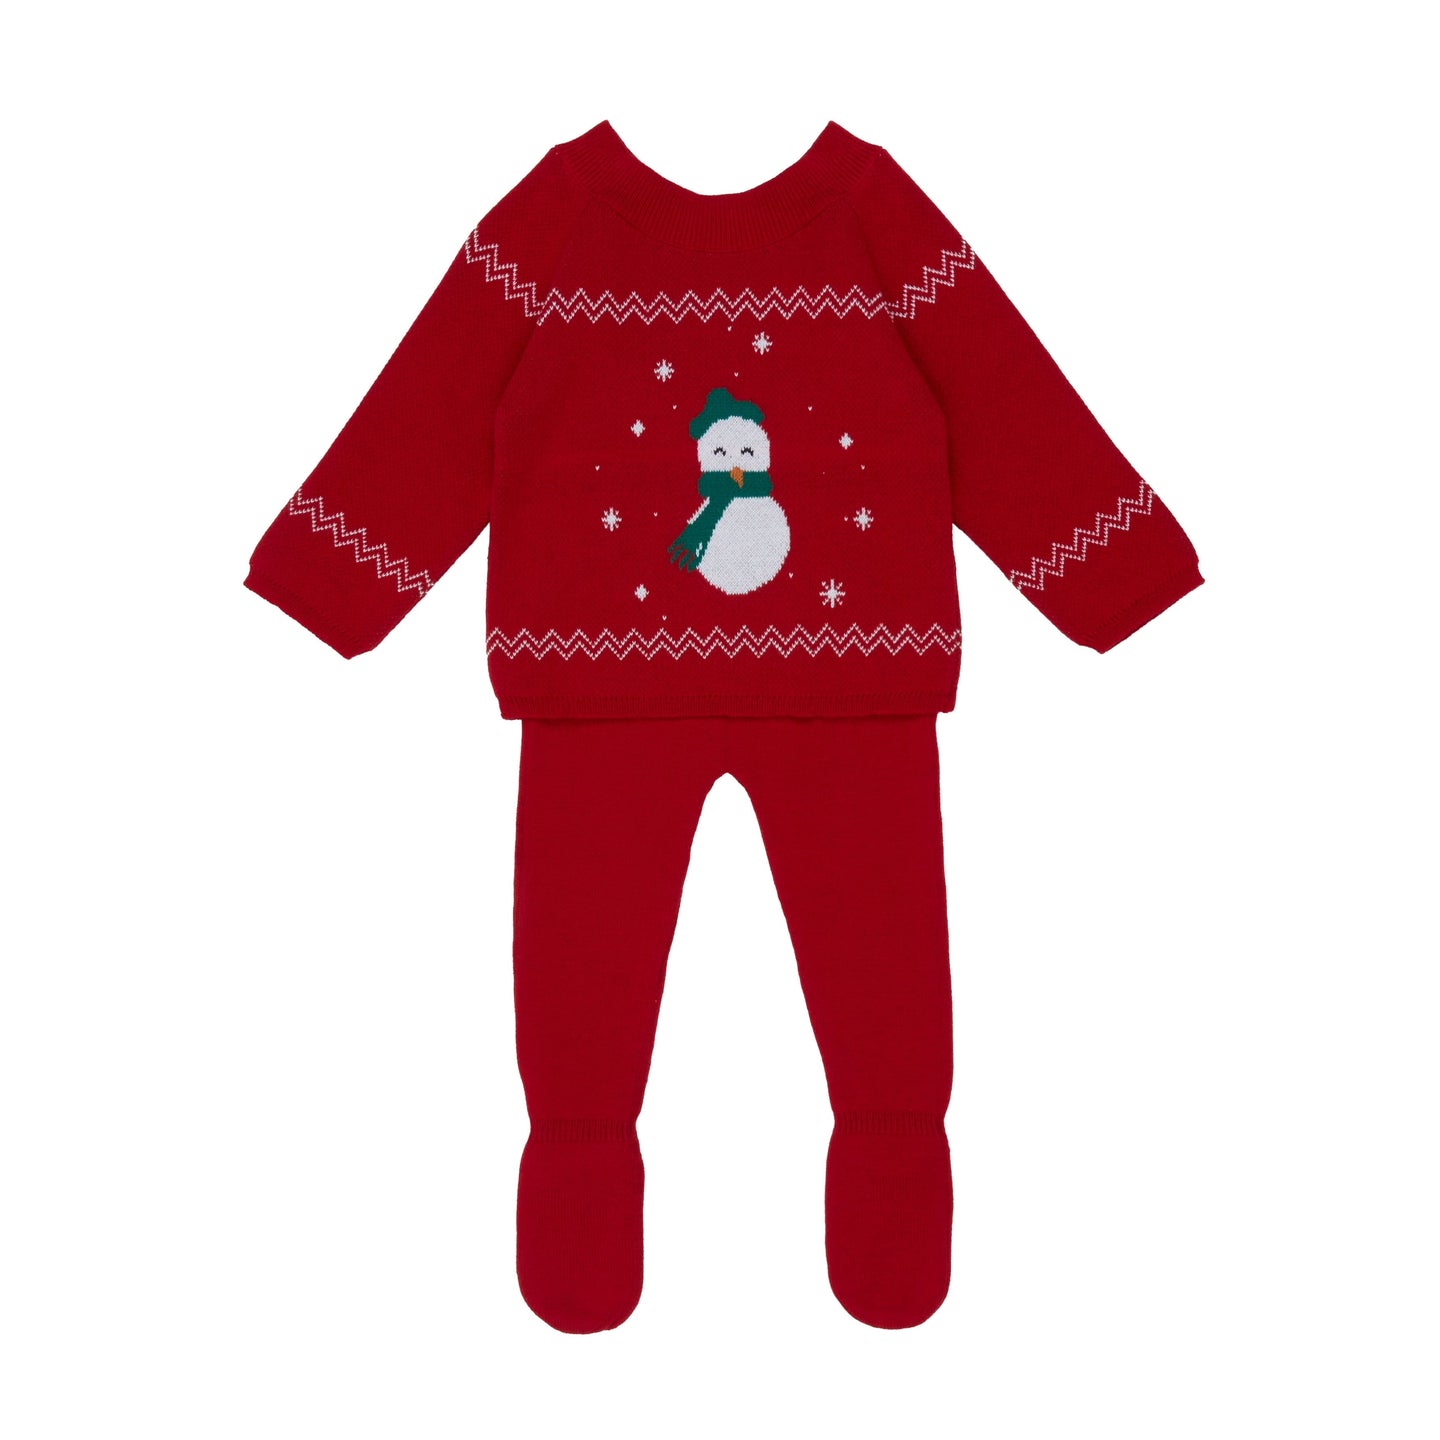 Snowman Baby Knit Set